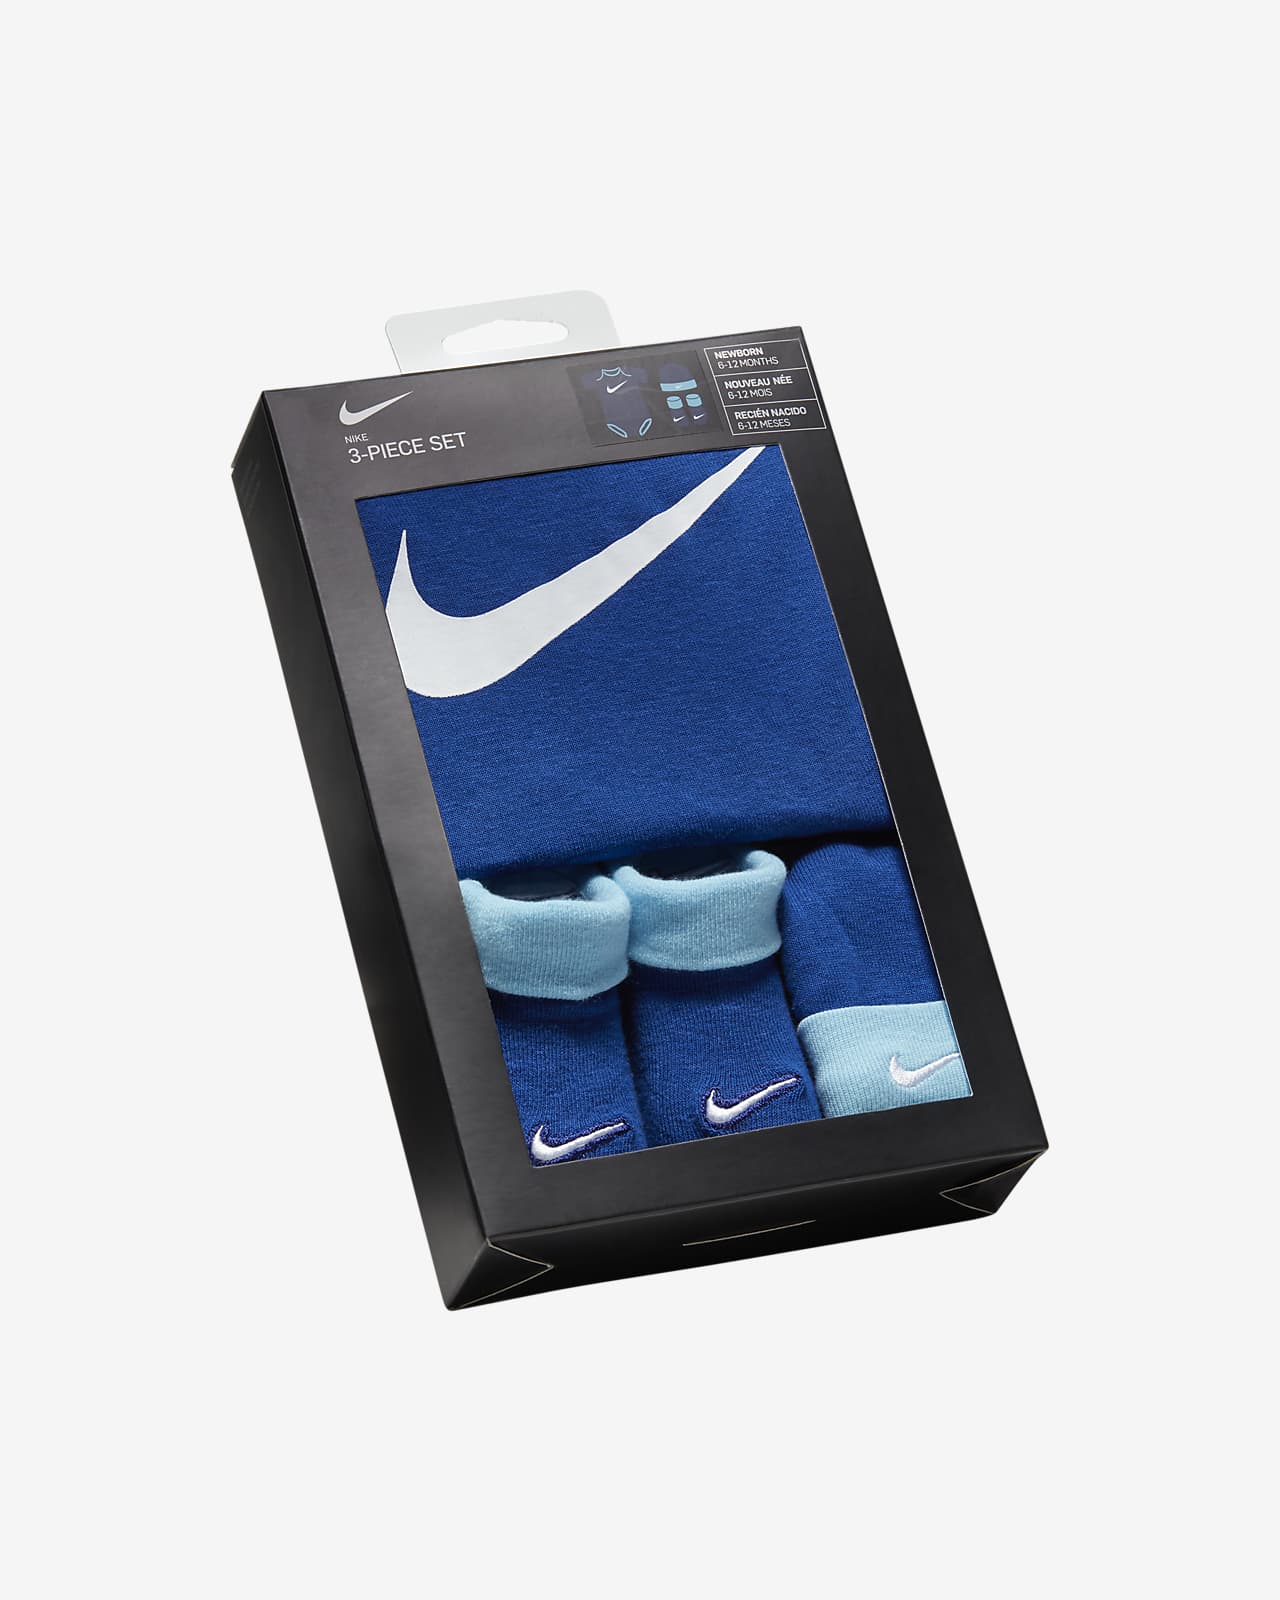 Nike Baby (6-12M) Bodysuit, Hat and Booties Box Set. Nike.com